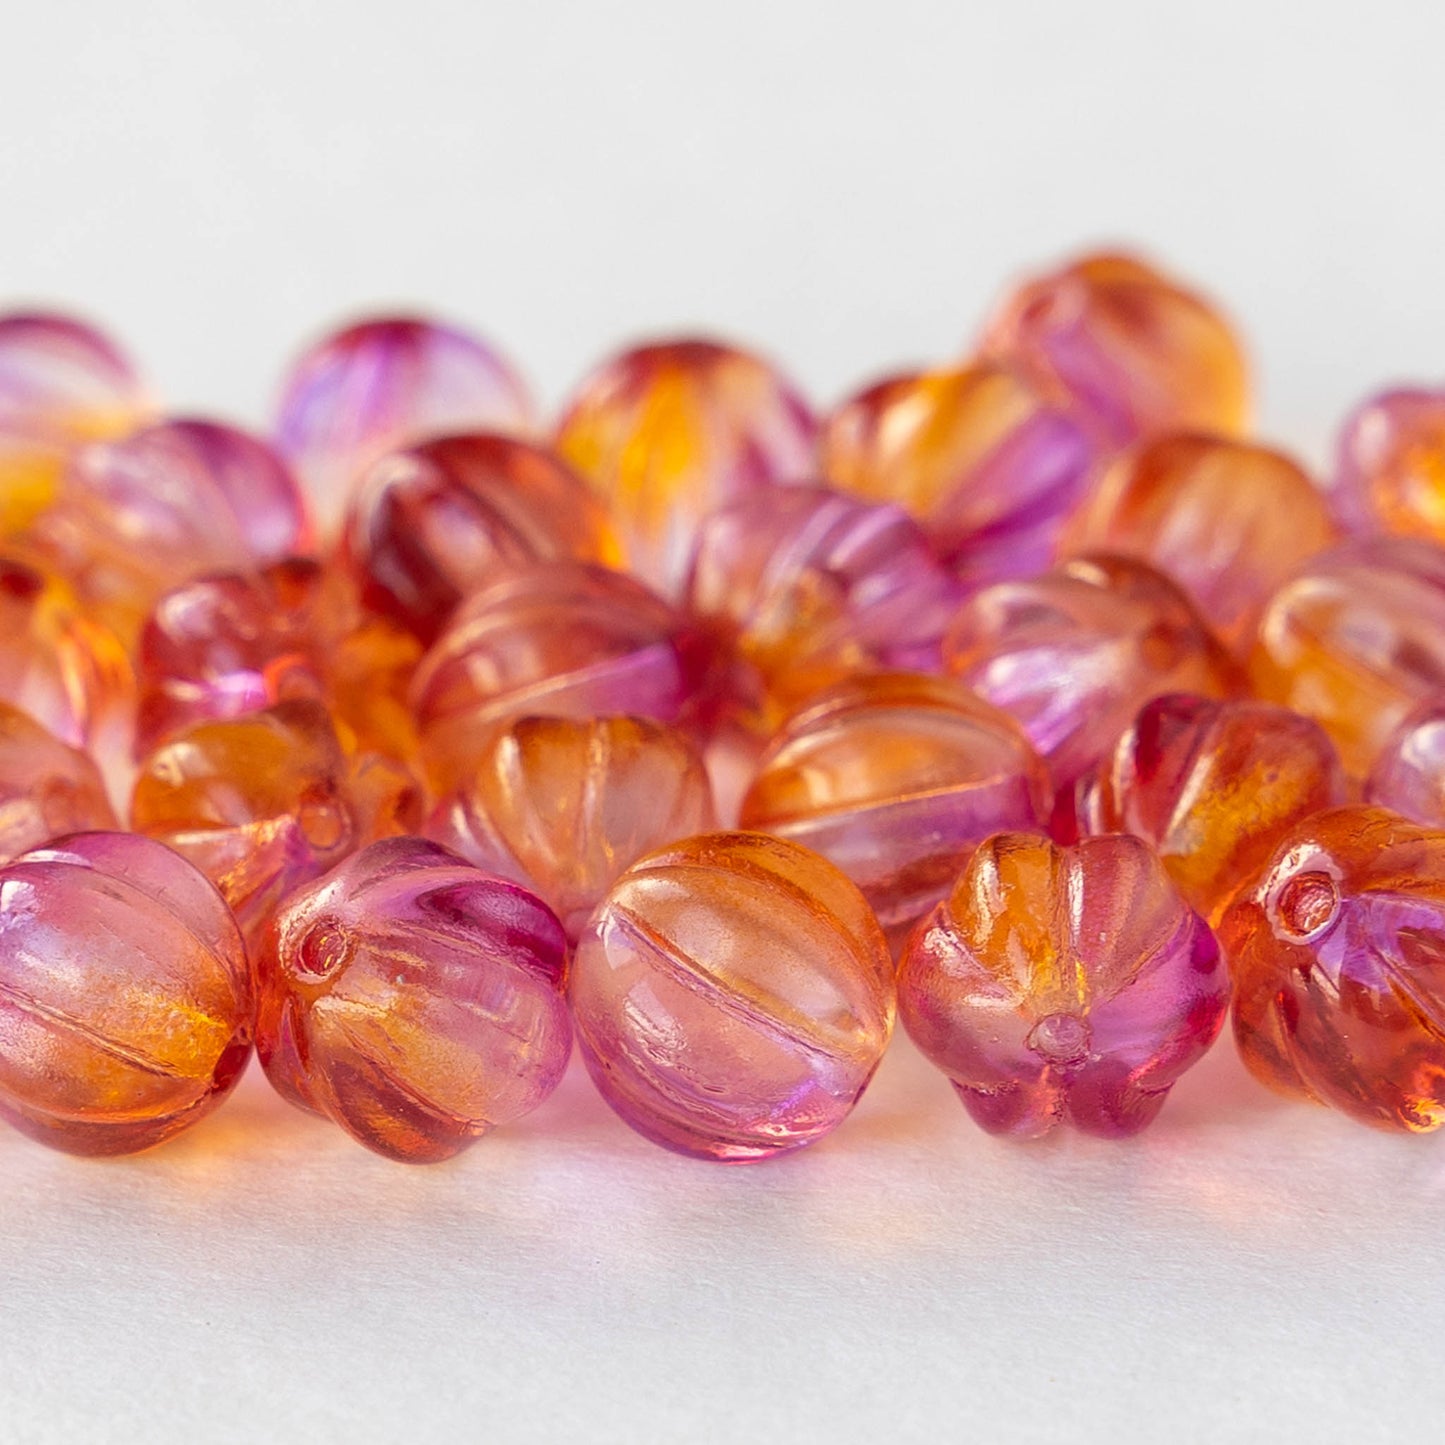 8mm Melon Beads - Peachy Pink Orange Mix - 25 Beads